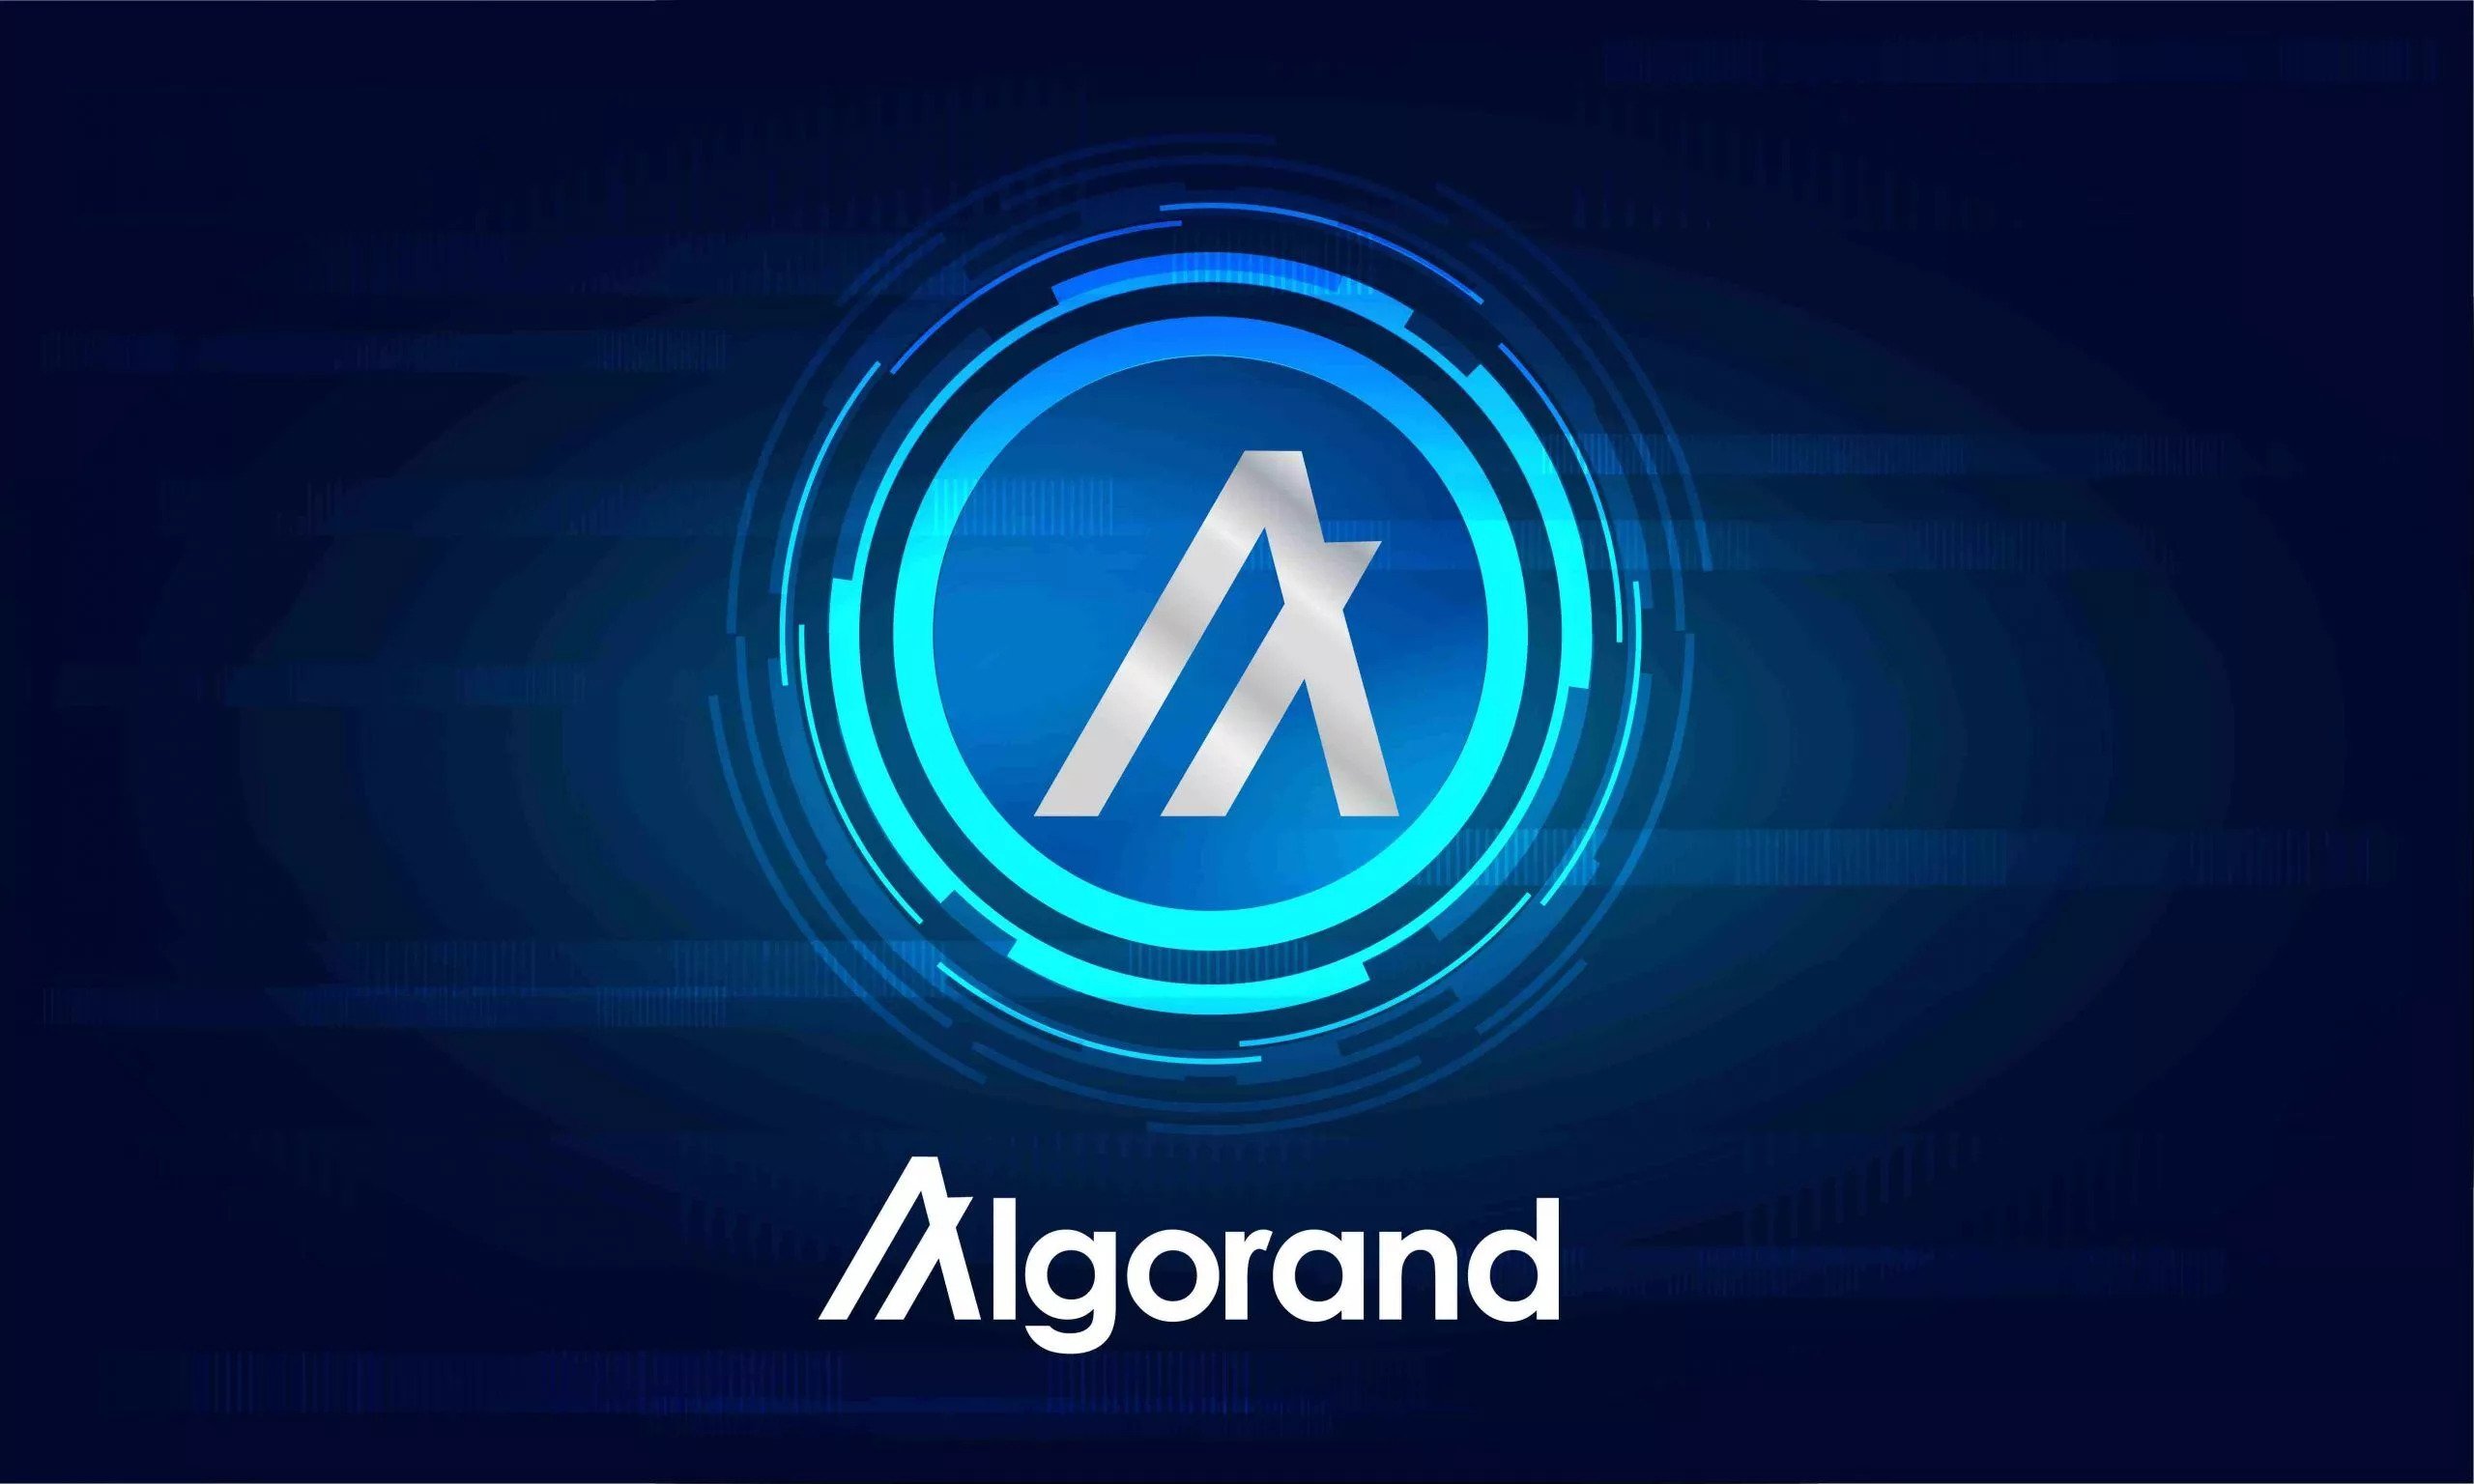 Algorand crypto project